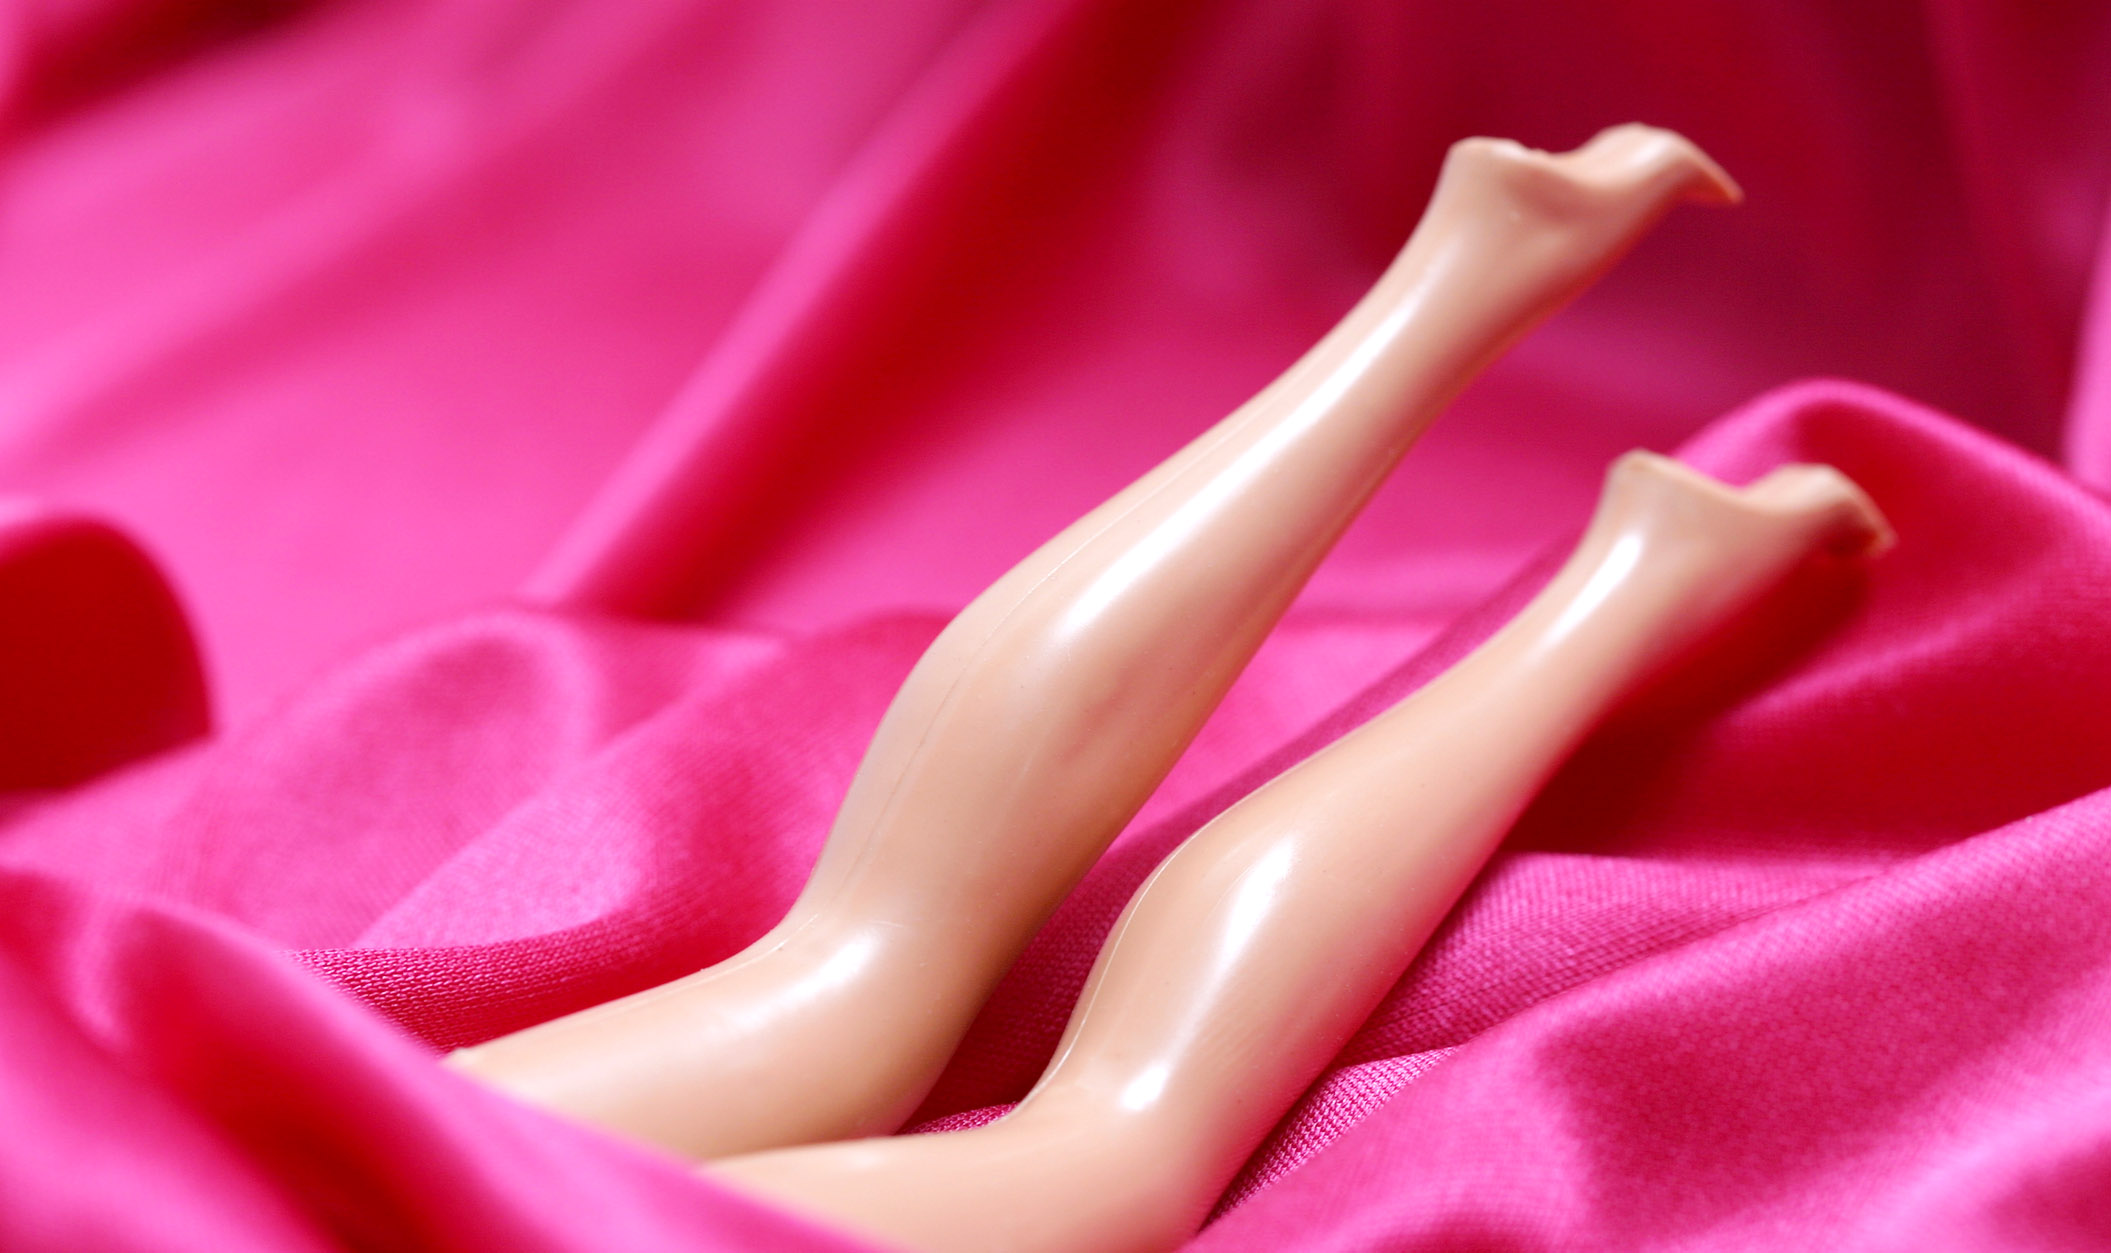 Mattel Has Finally Felt The Need To Address The Strange Viral Barbie Feet Instagram Trend